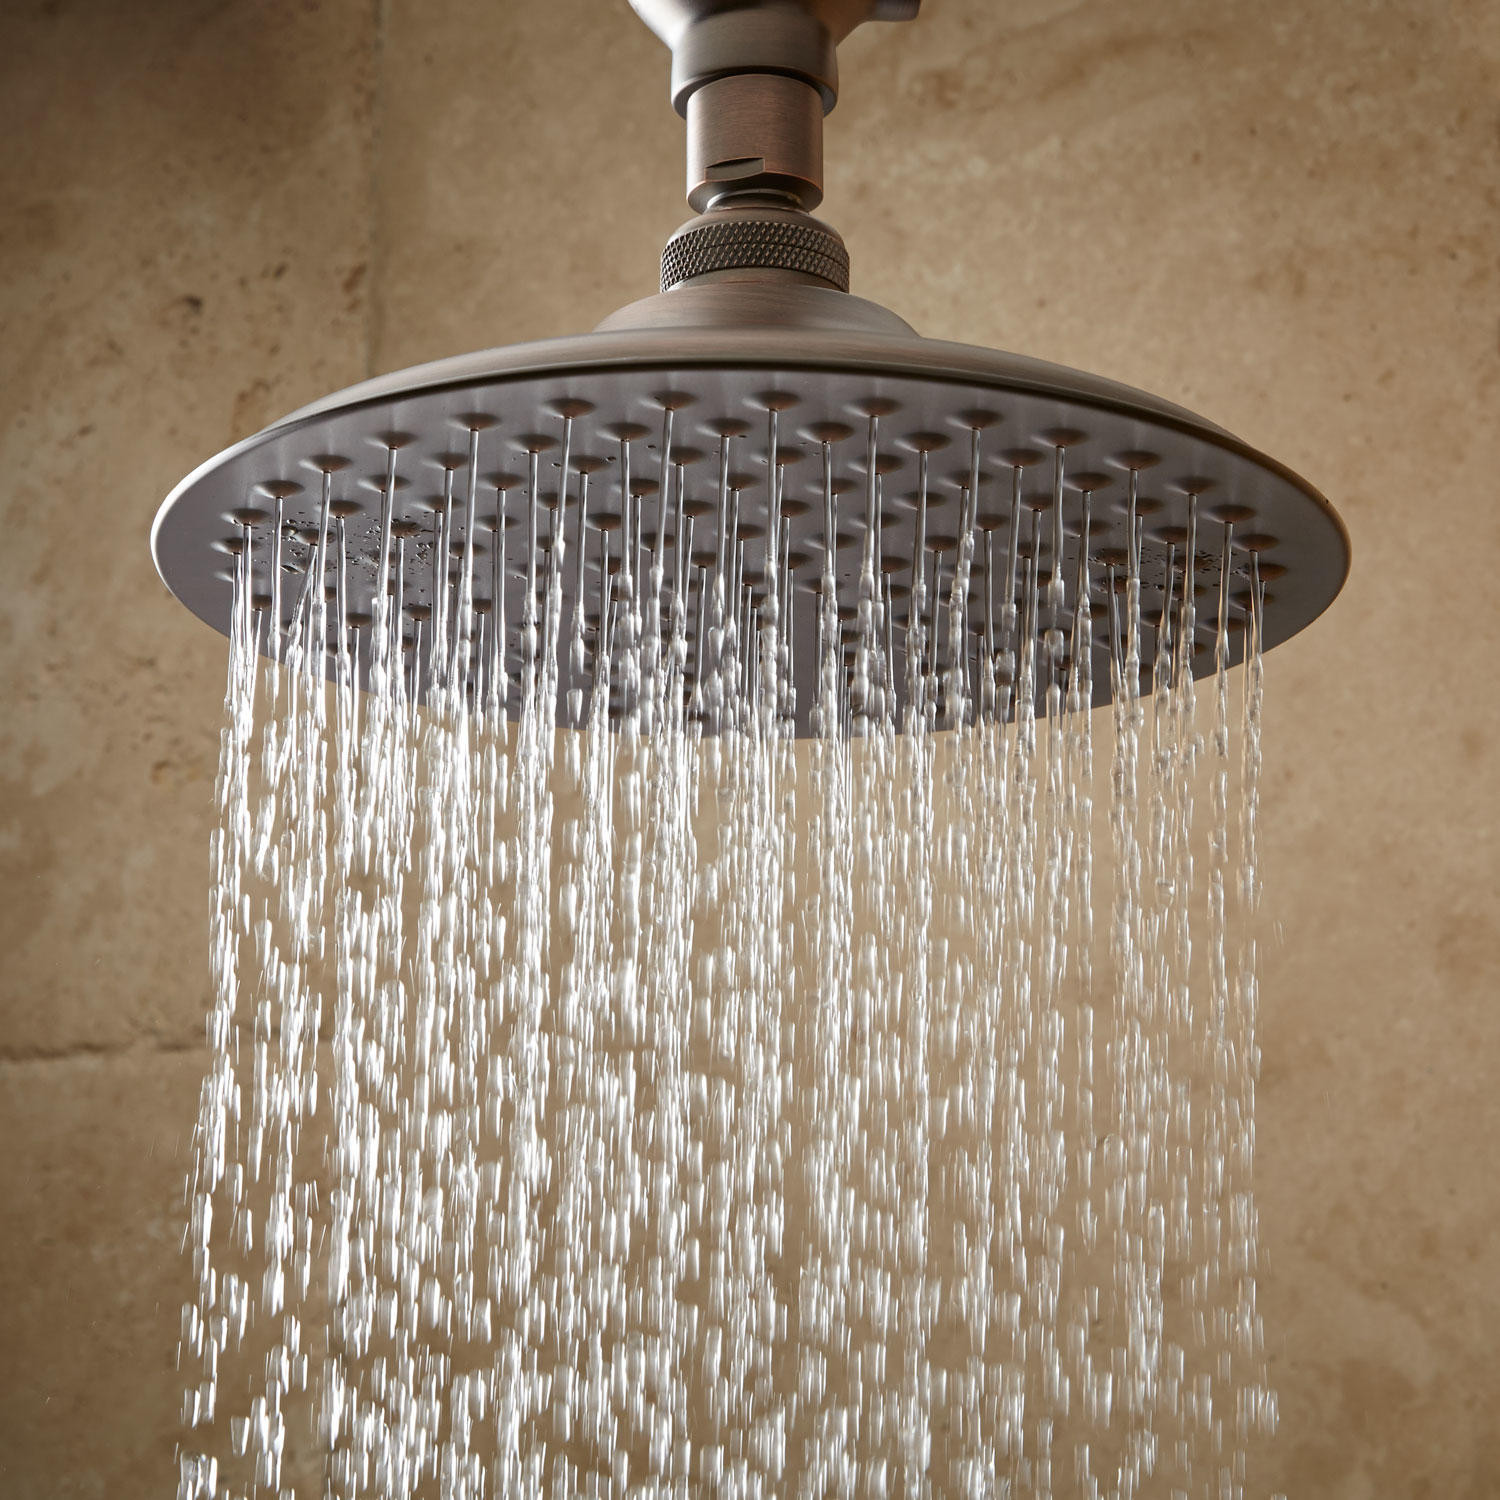 Bathroom Shower Head
 Bostonian Rainfall Shower Head With S Type Arm Bathroom